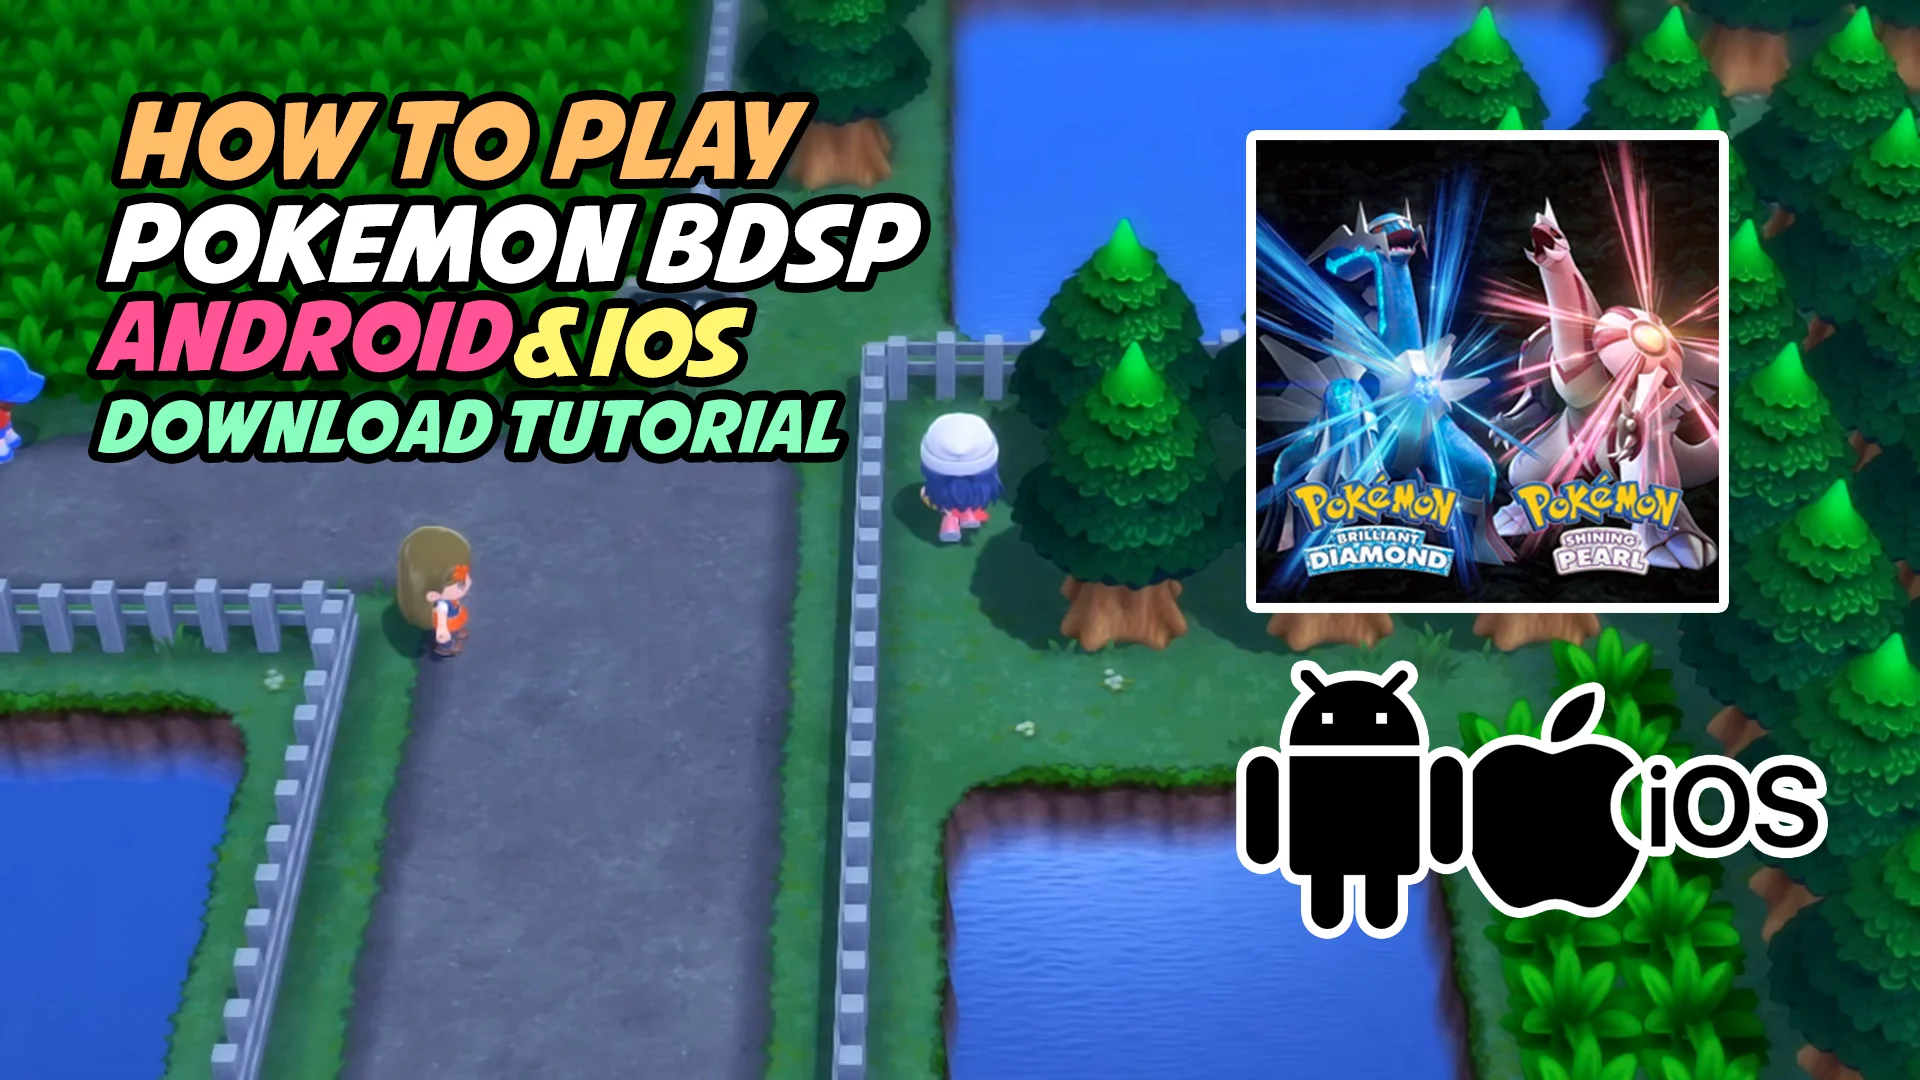 Pokemon Brilliant Diamond/Shining Pearl emulator Android/iOS Download